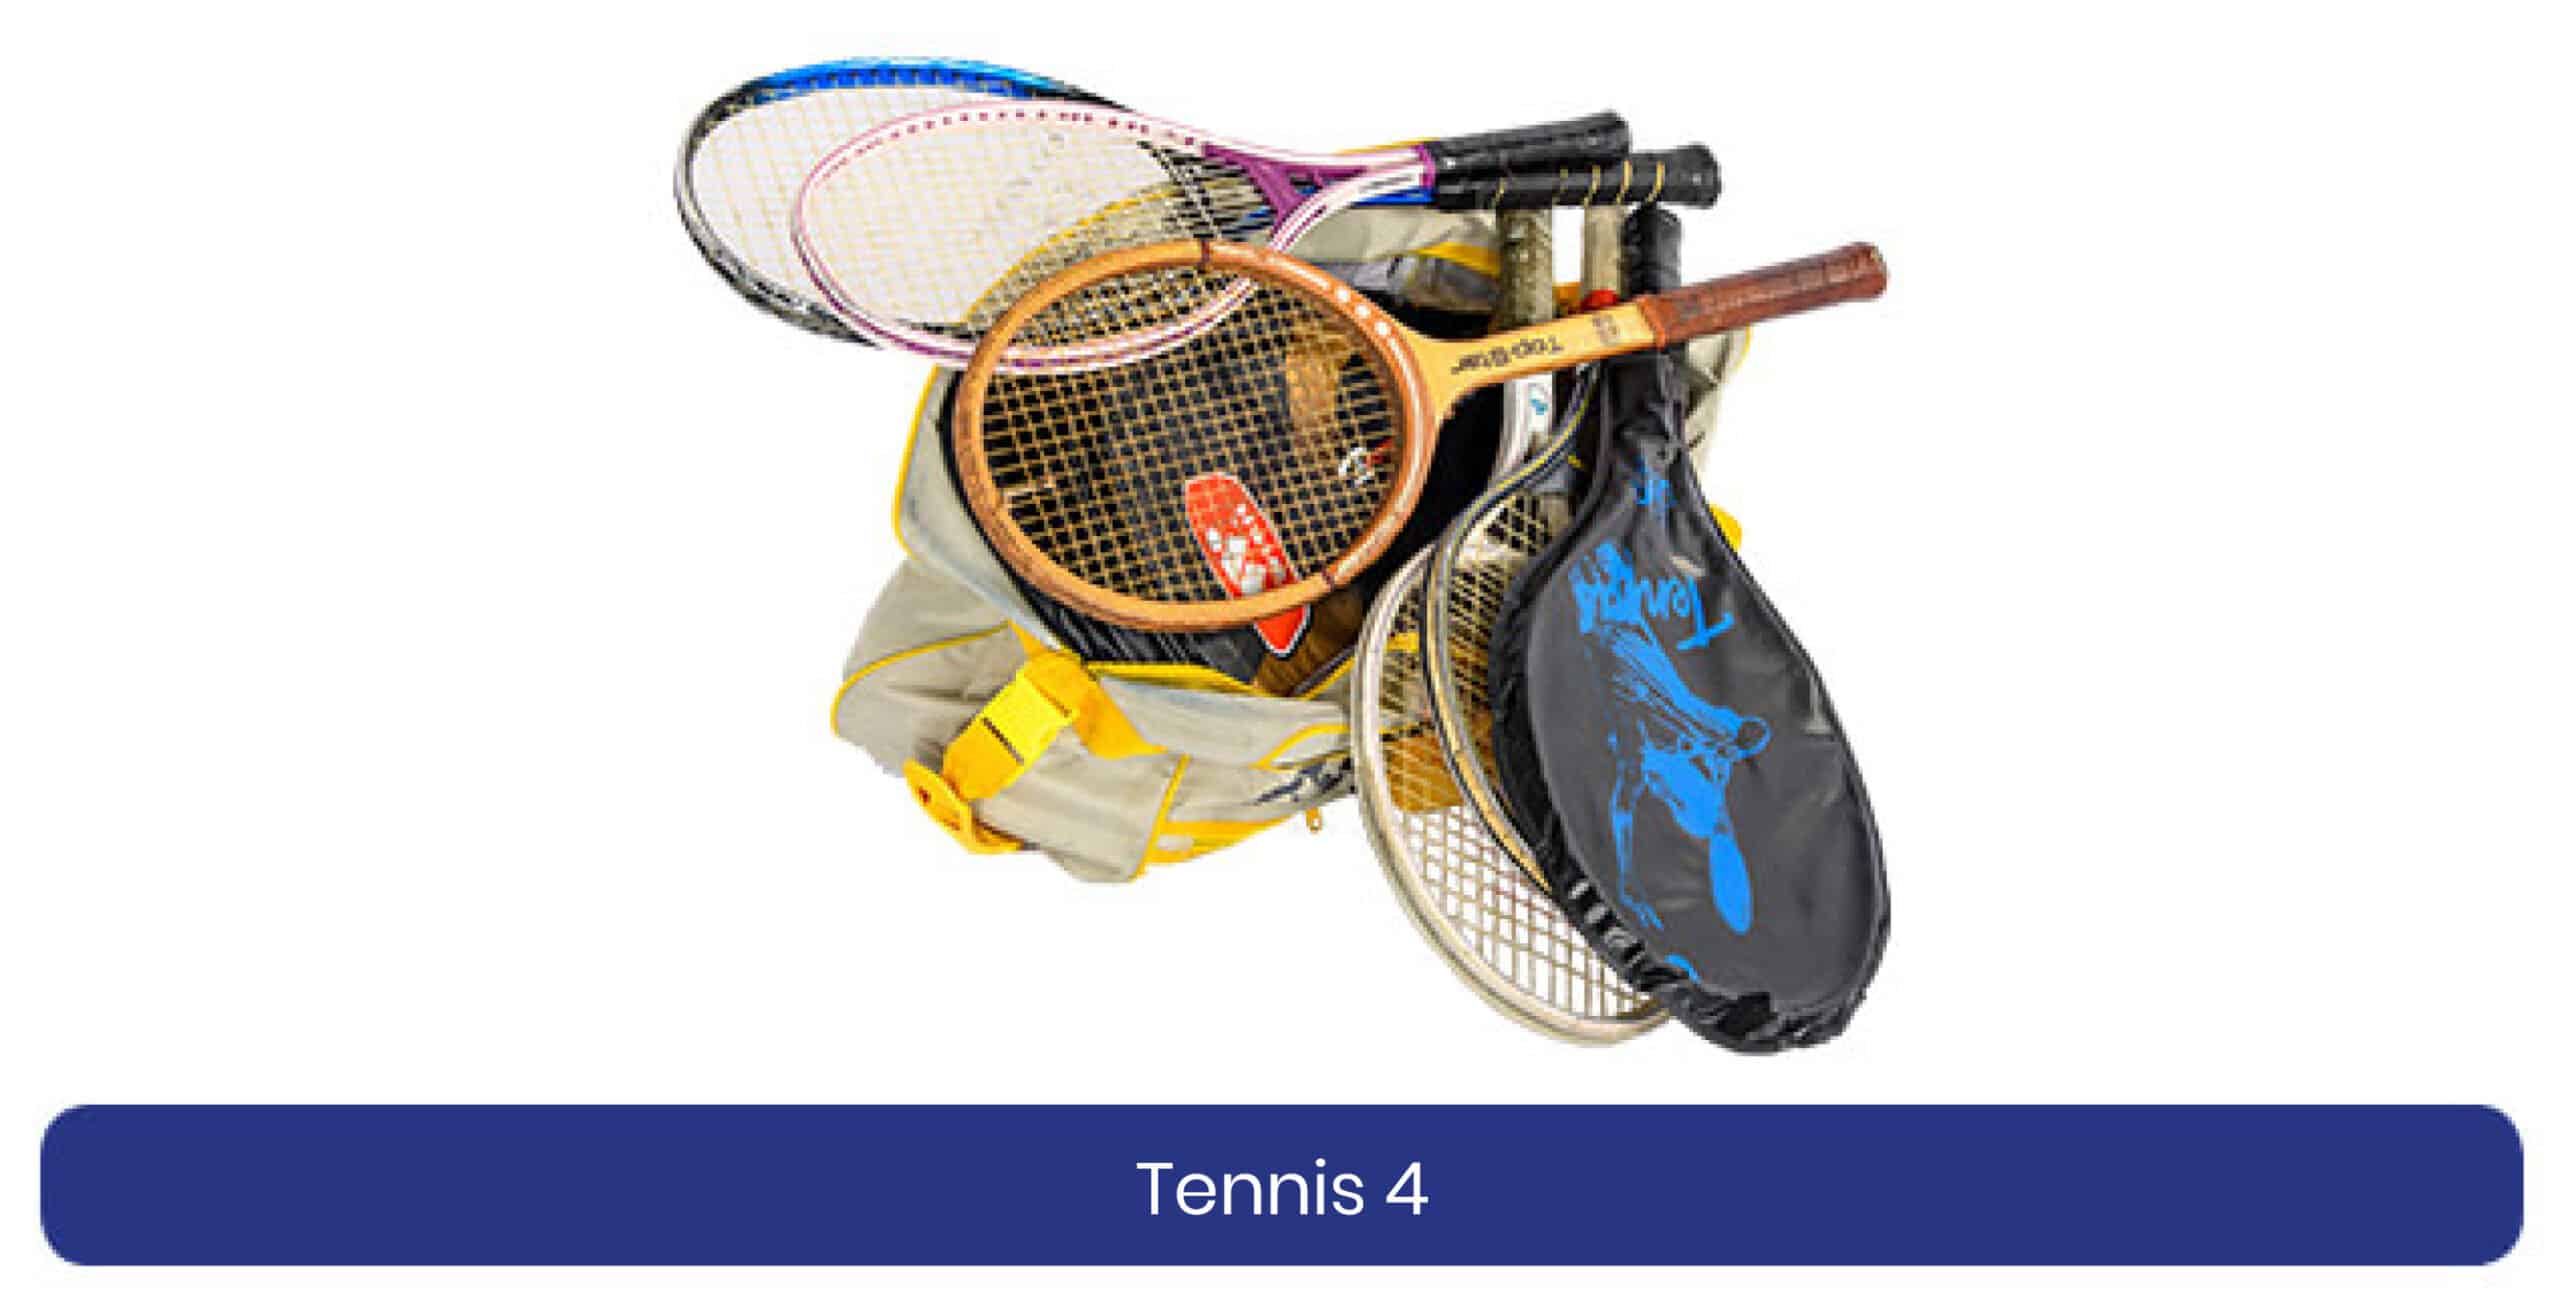 Tennis 4 lenen product